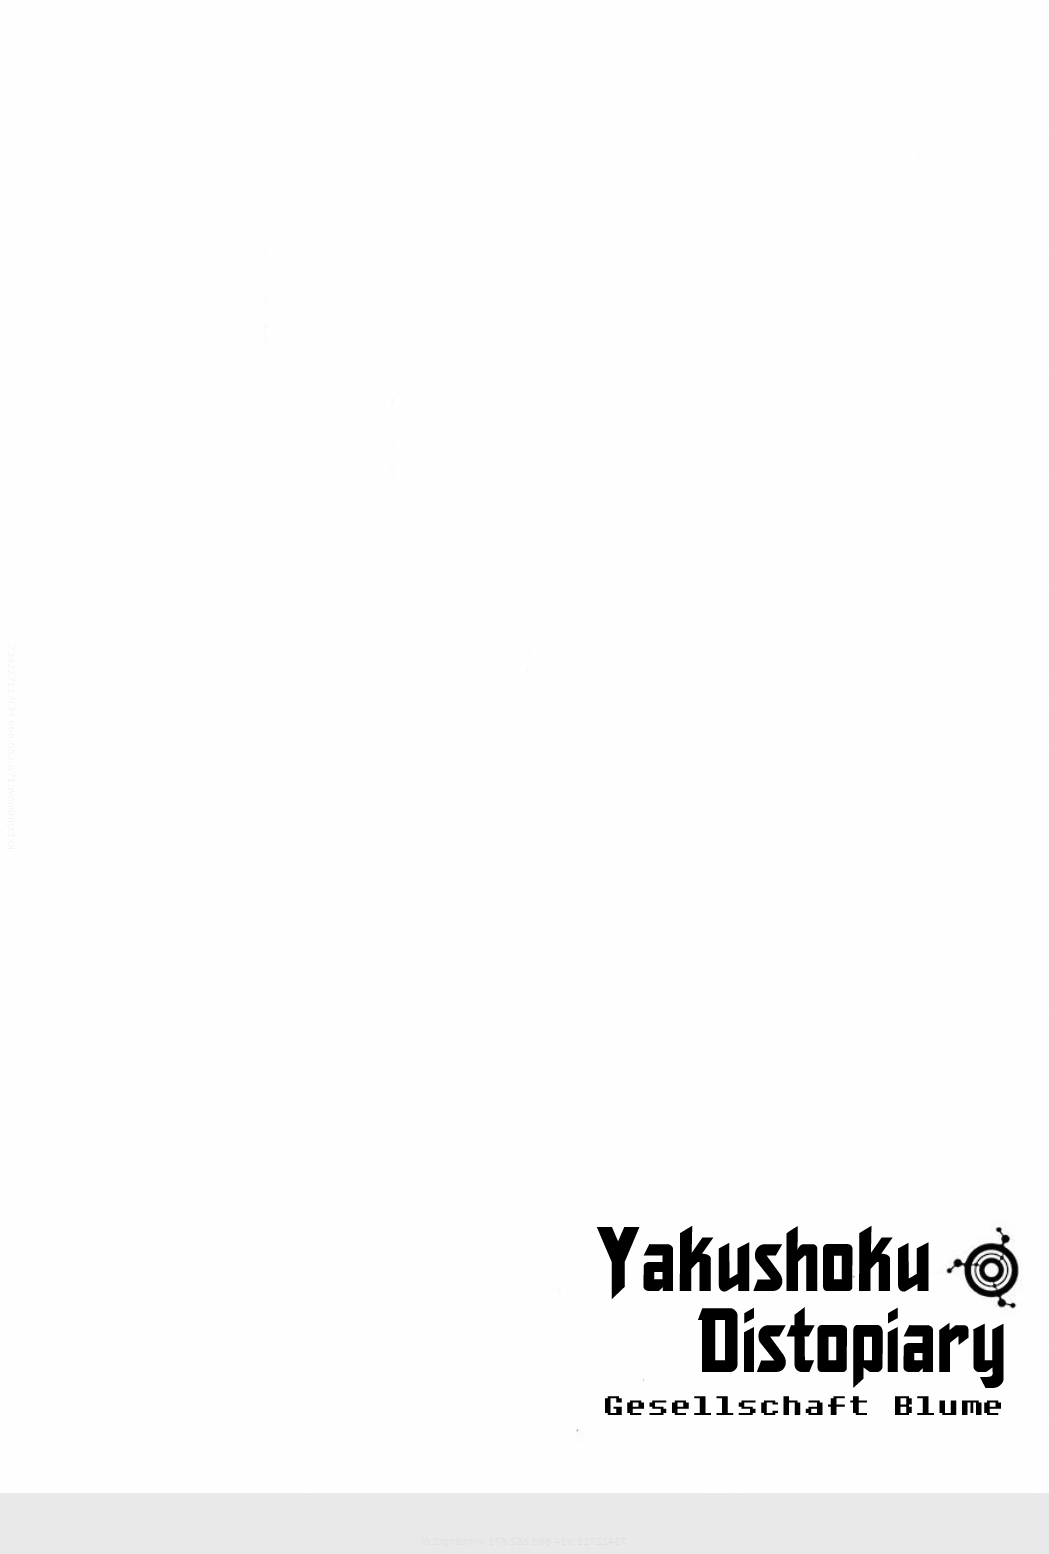 Yakushoku Distopiary - Gesellschaft Blume Vol.6 Ch.30